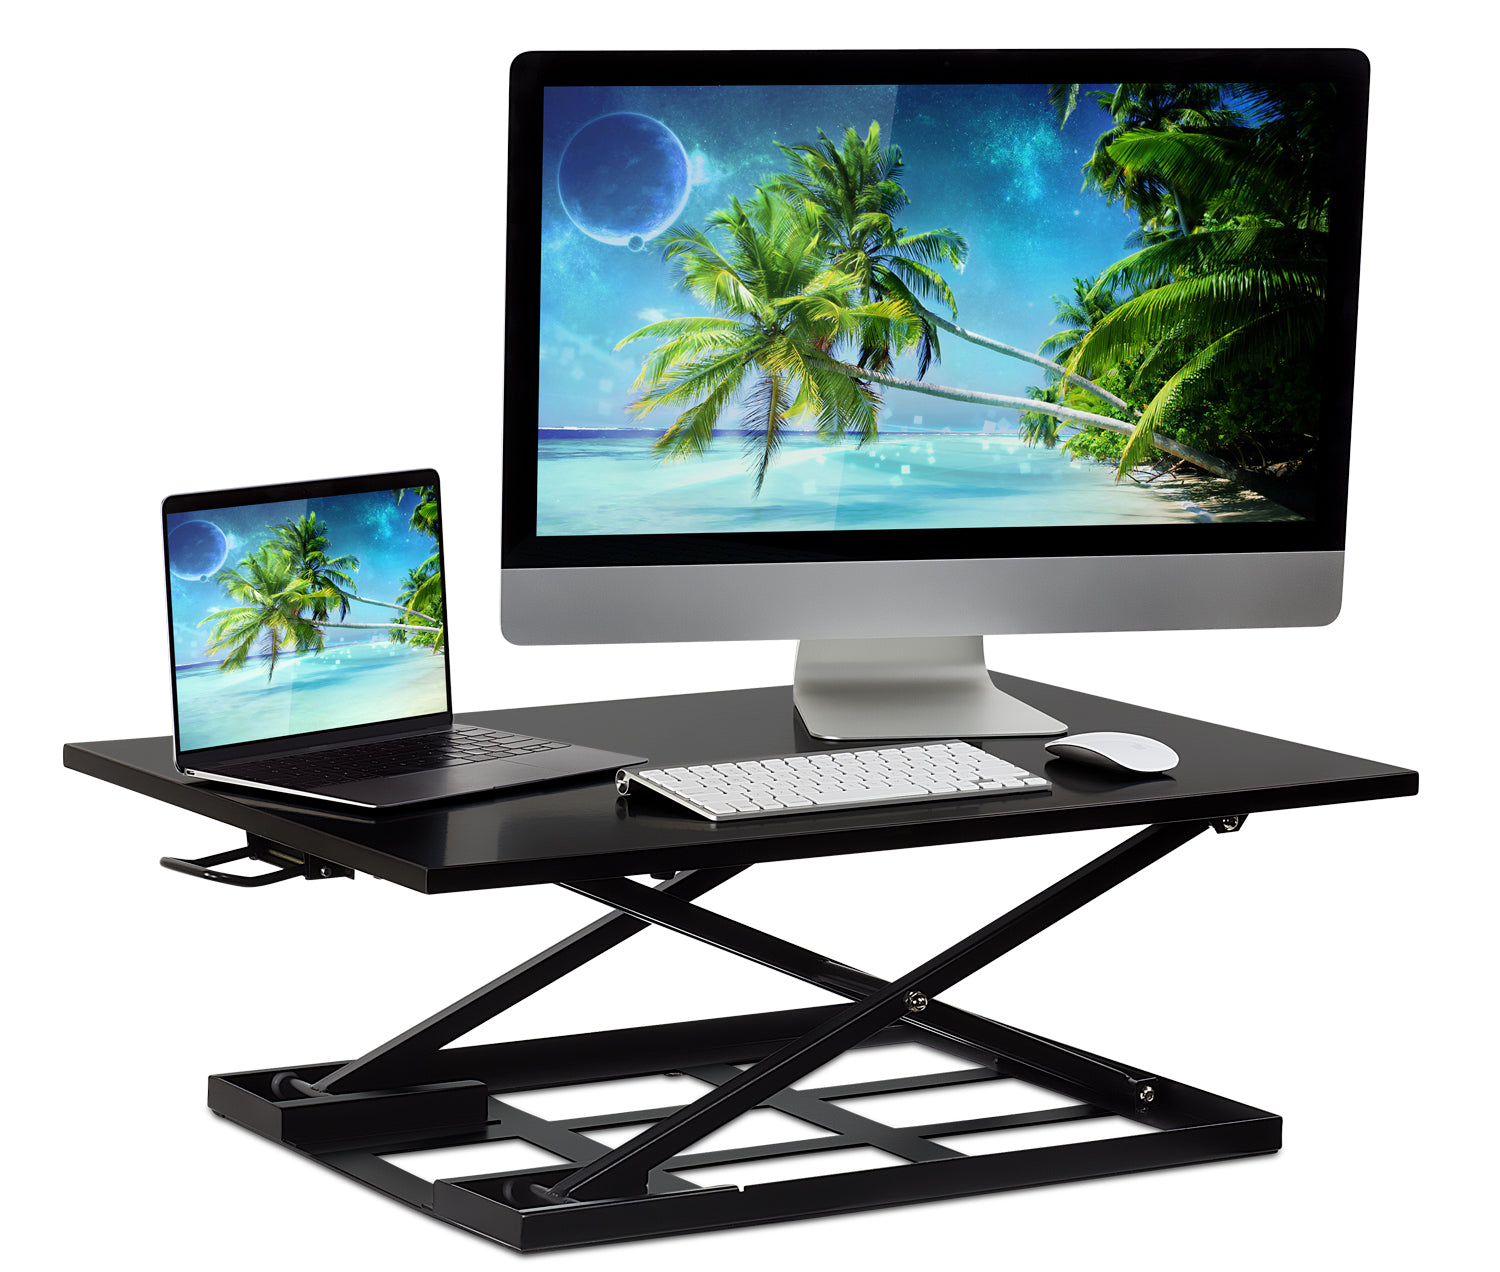 Height Adjustable X-Lift Standing Desk Converter